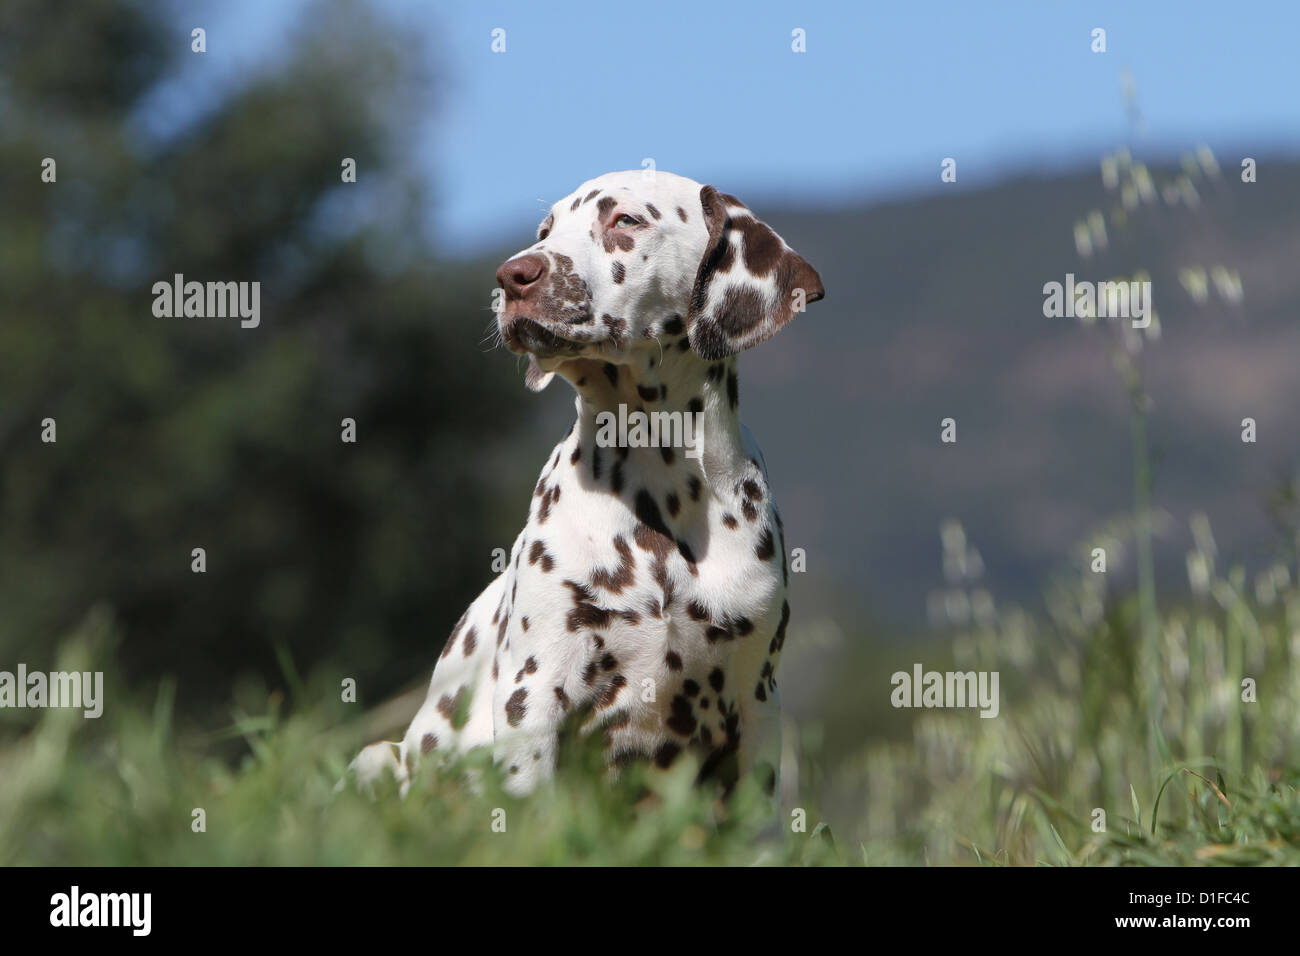 Dog Dalmatian / Dalmatiner / Dalmatien puppy sitting profile Stock Photo